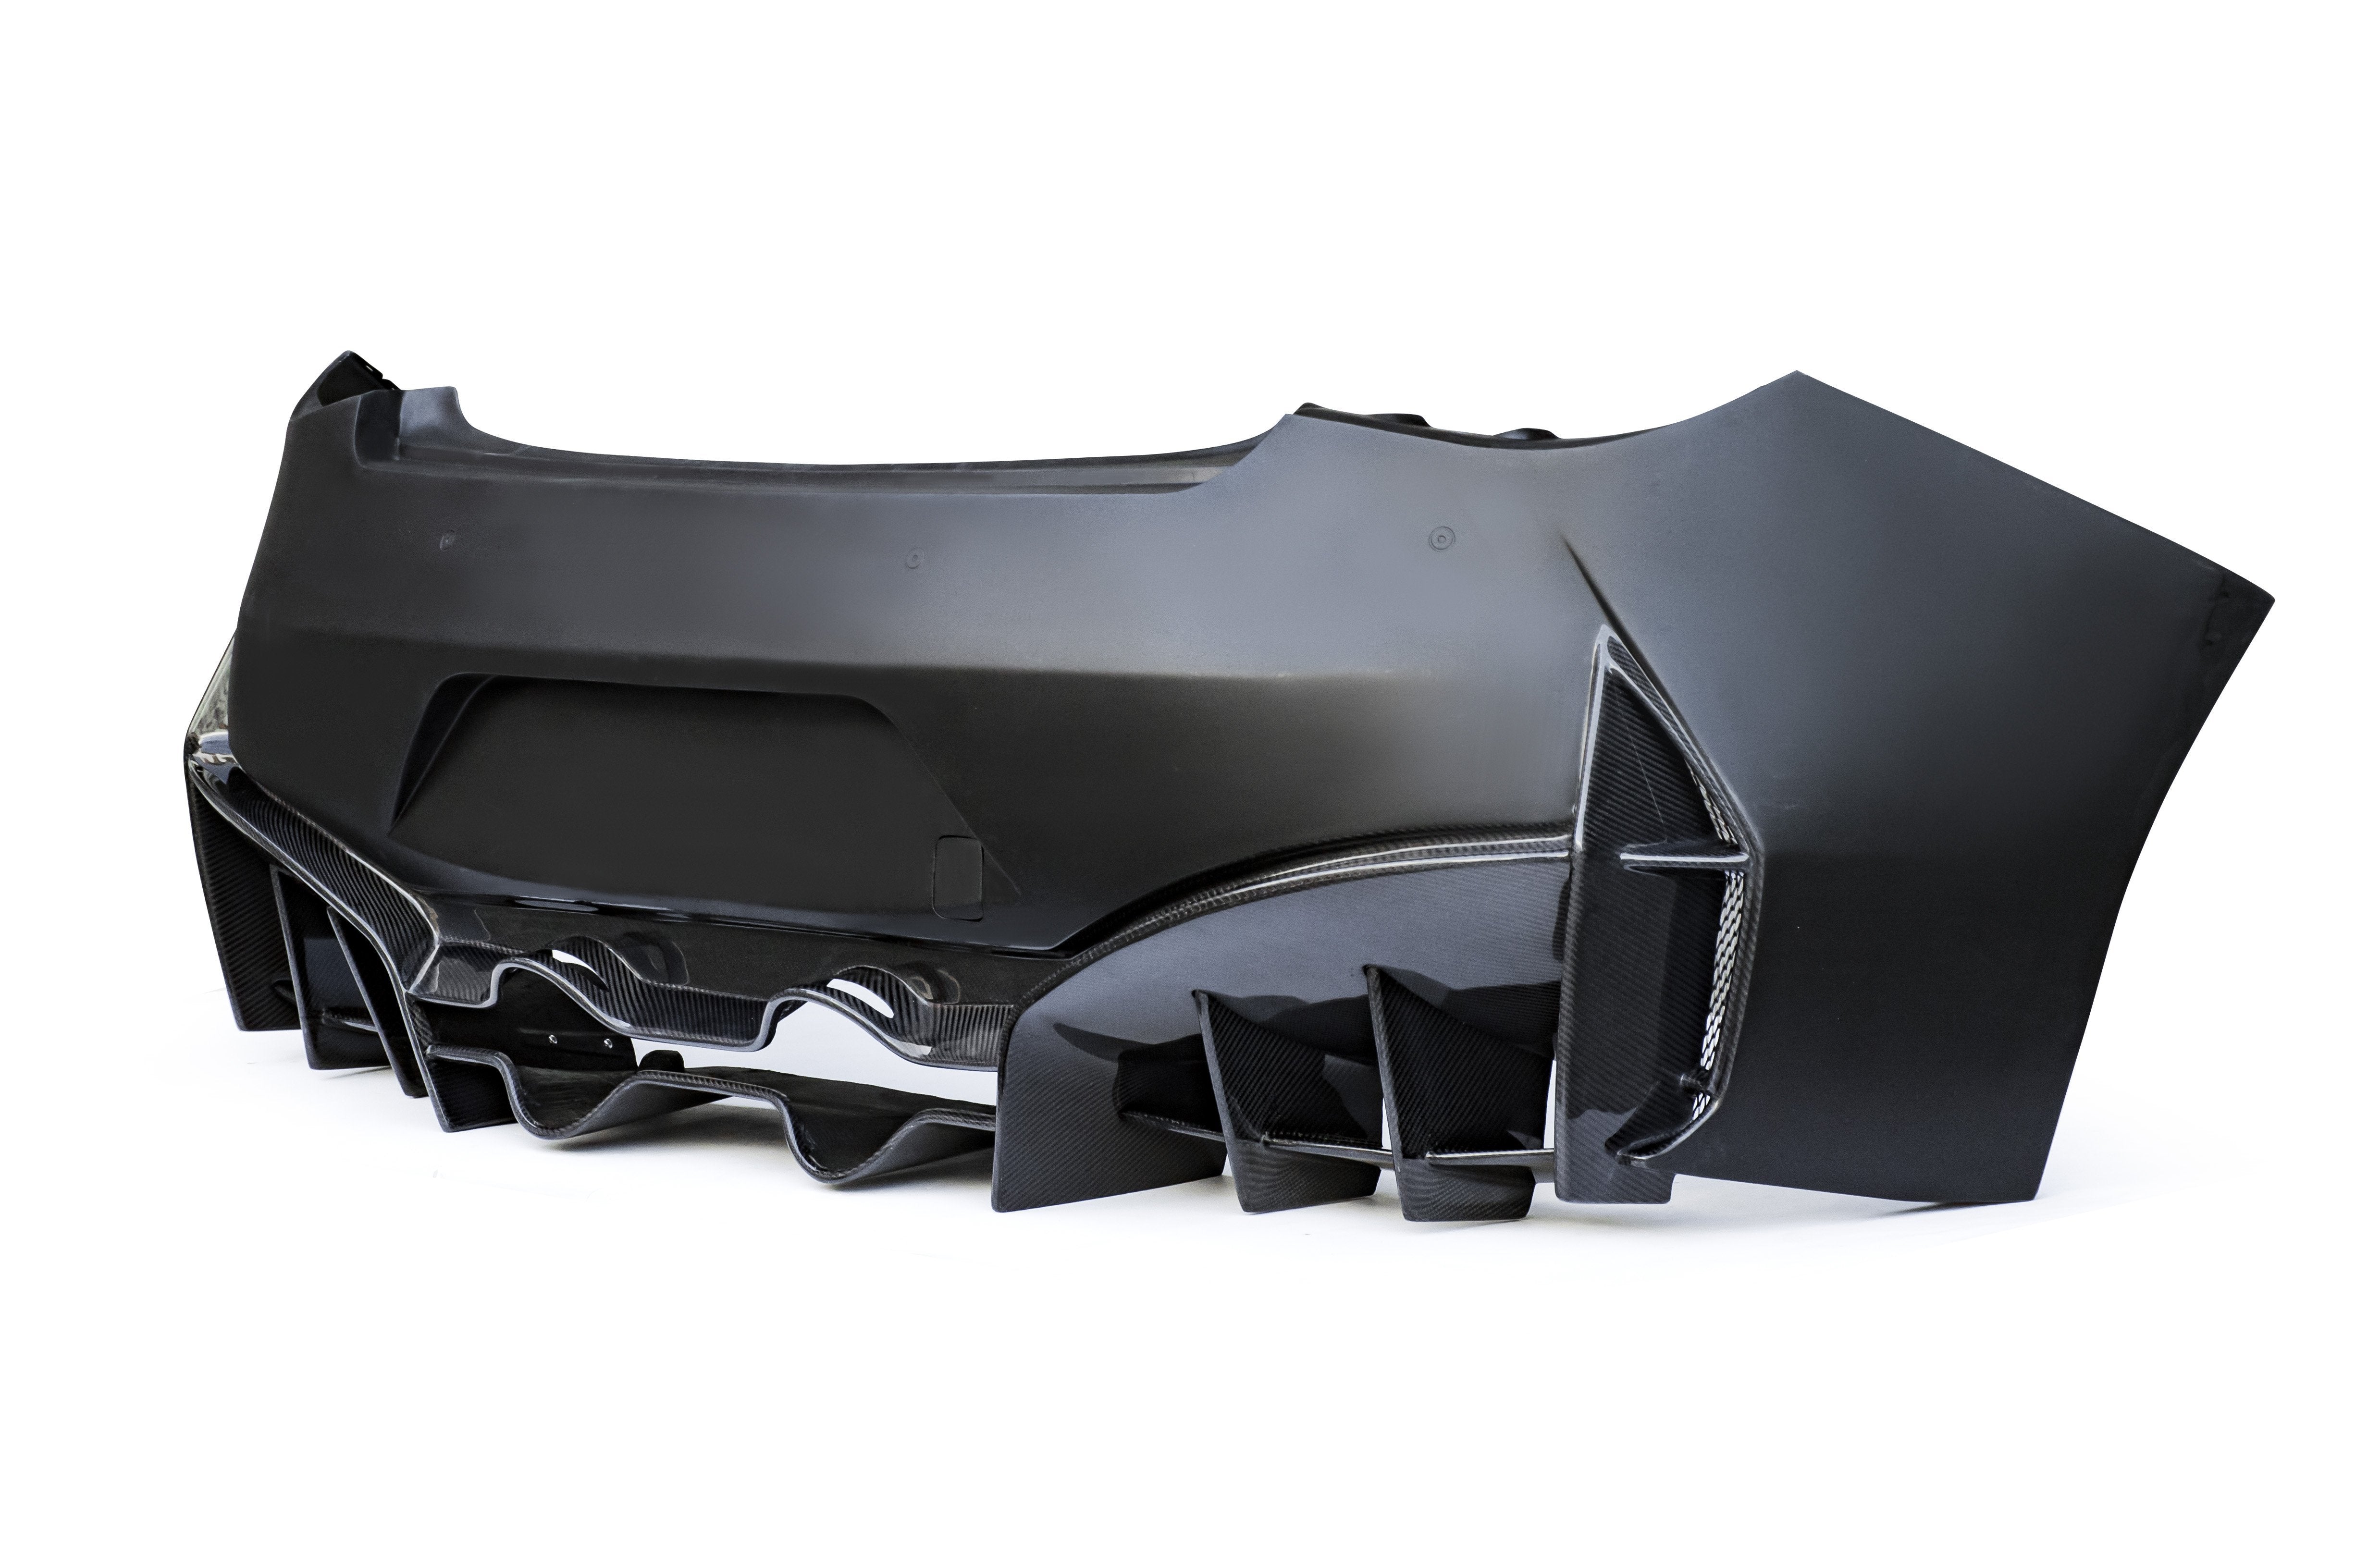 CMST Tuning Carbon Fiber Rear Bumper & Diffuser for Infiniti Q60 to Project Black S concept 2017-2022